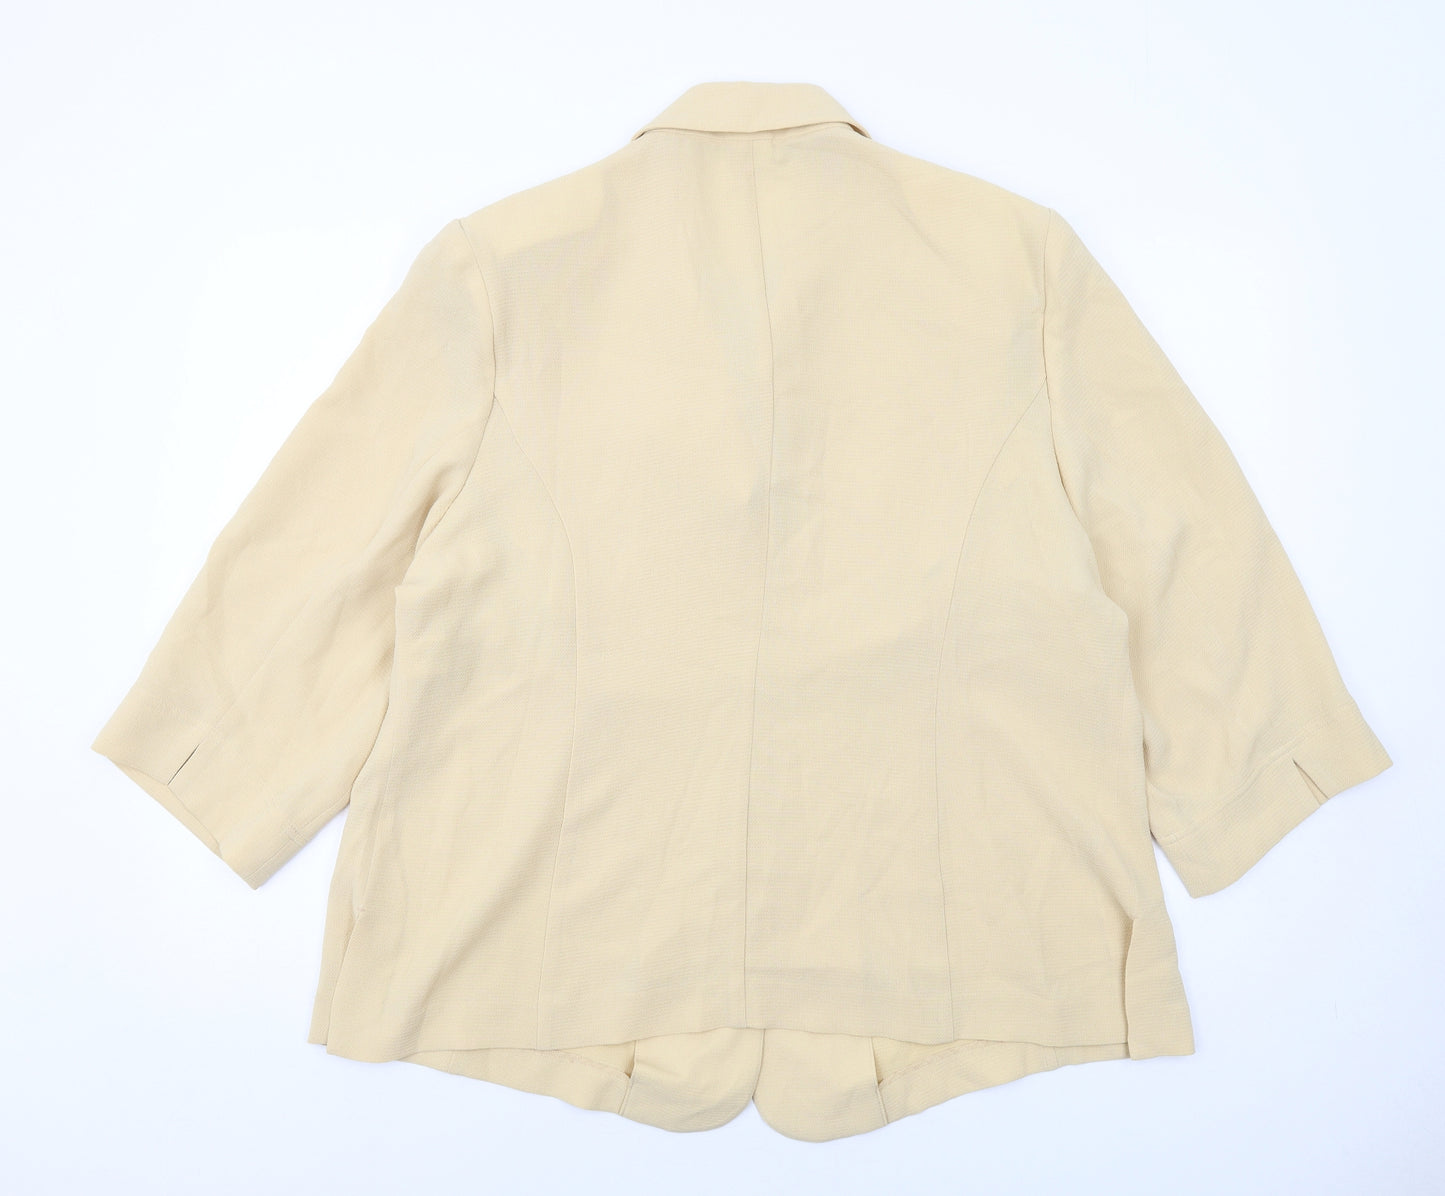 Riona Stone Womens Beige Jacket Blazer Size 22 Button